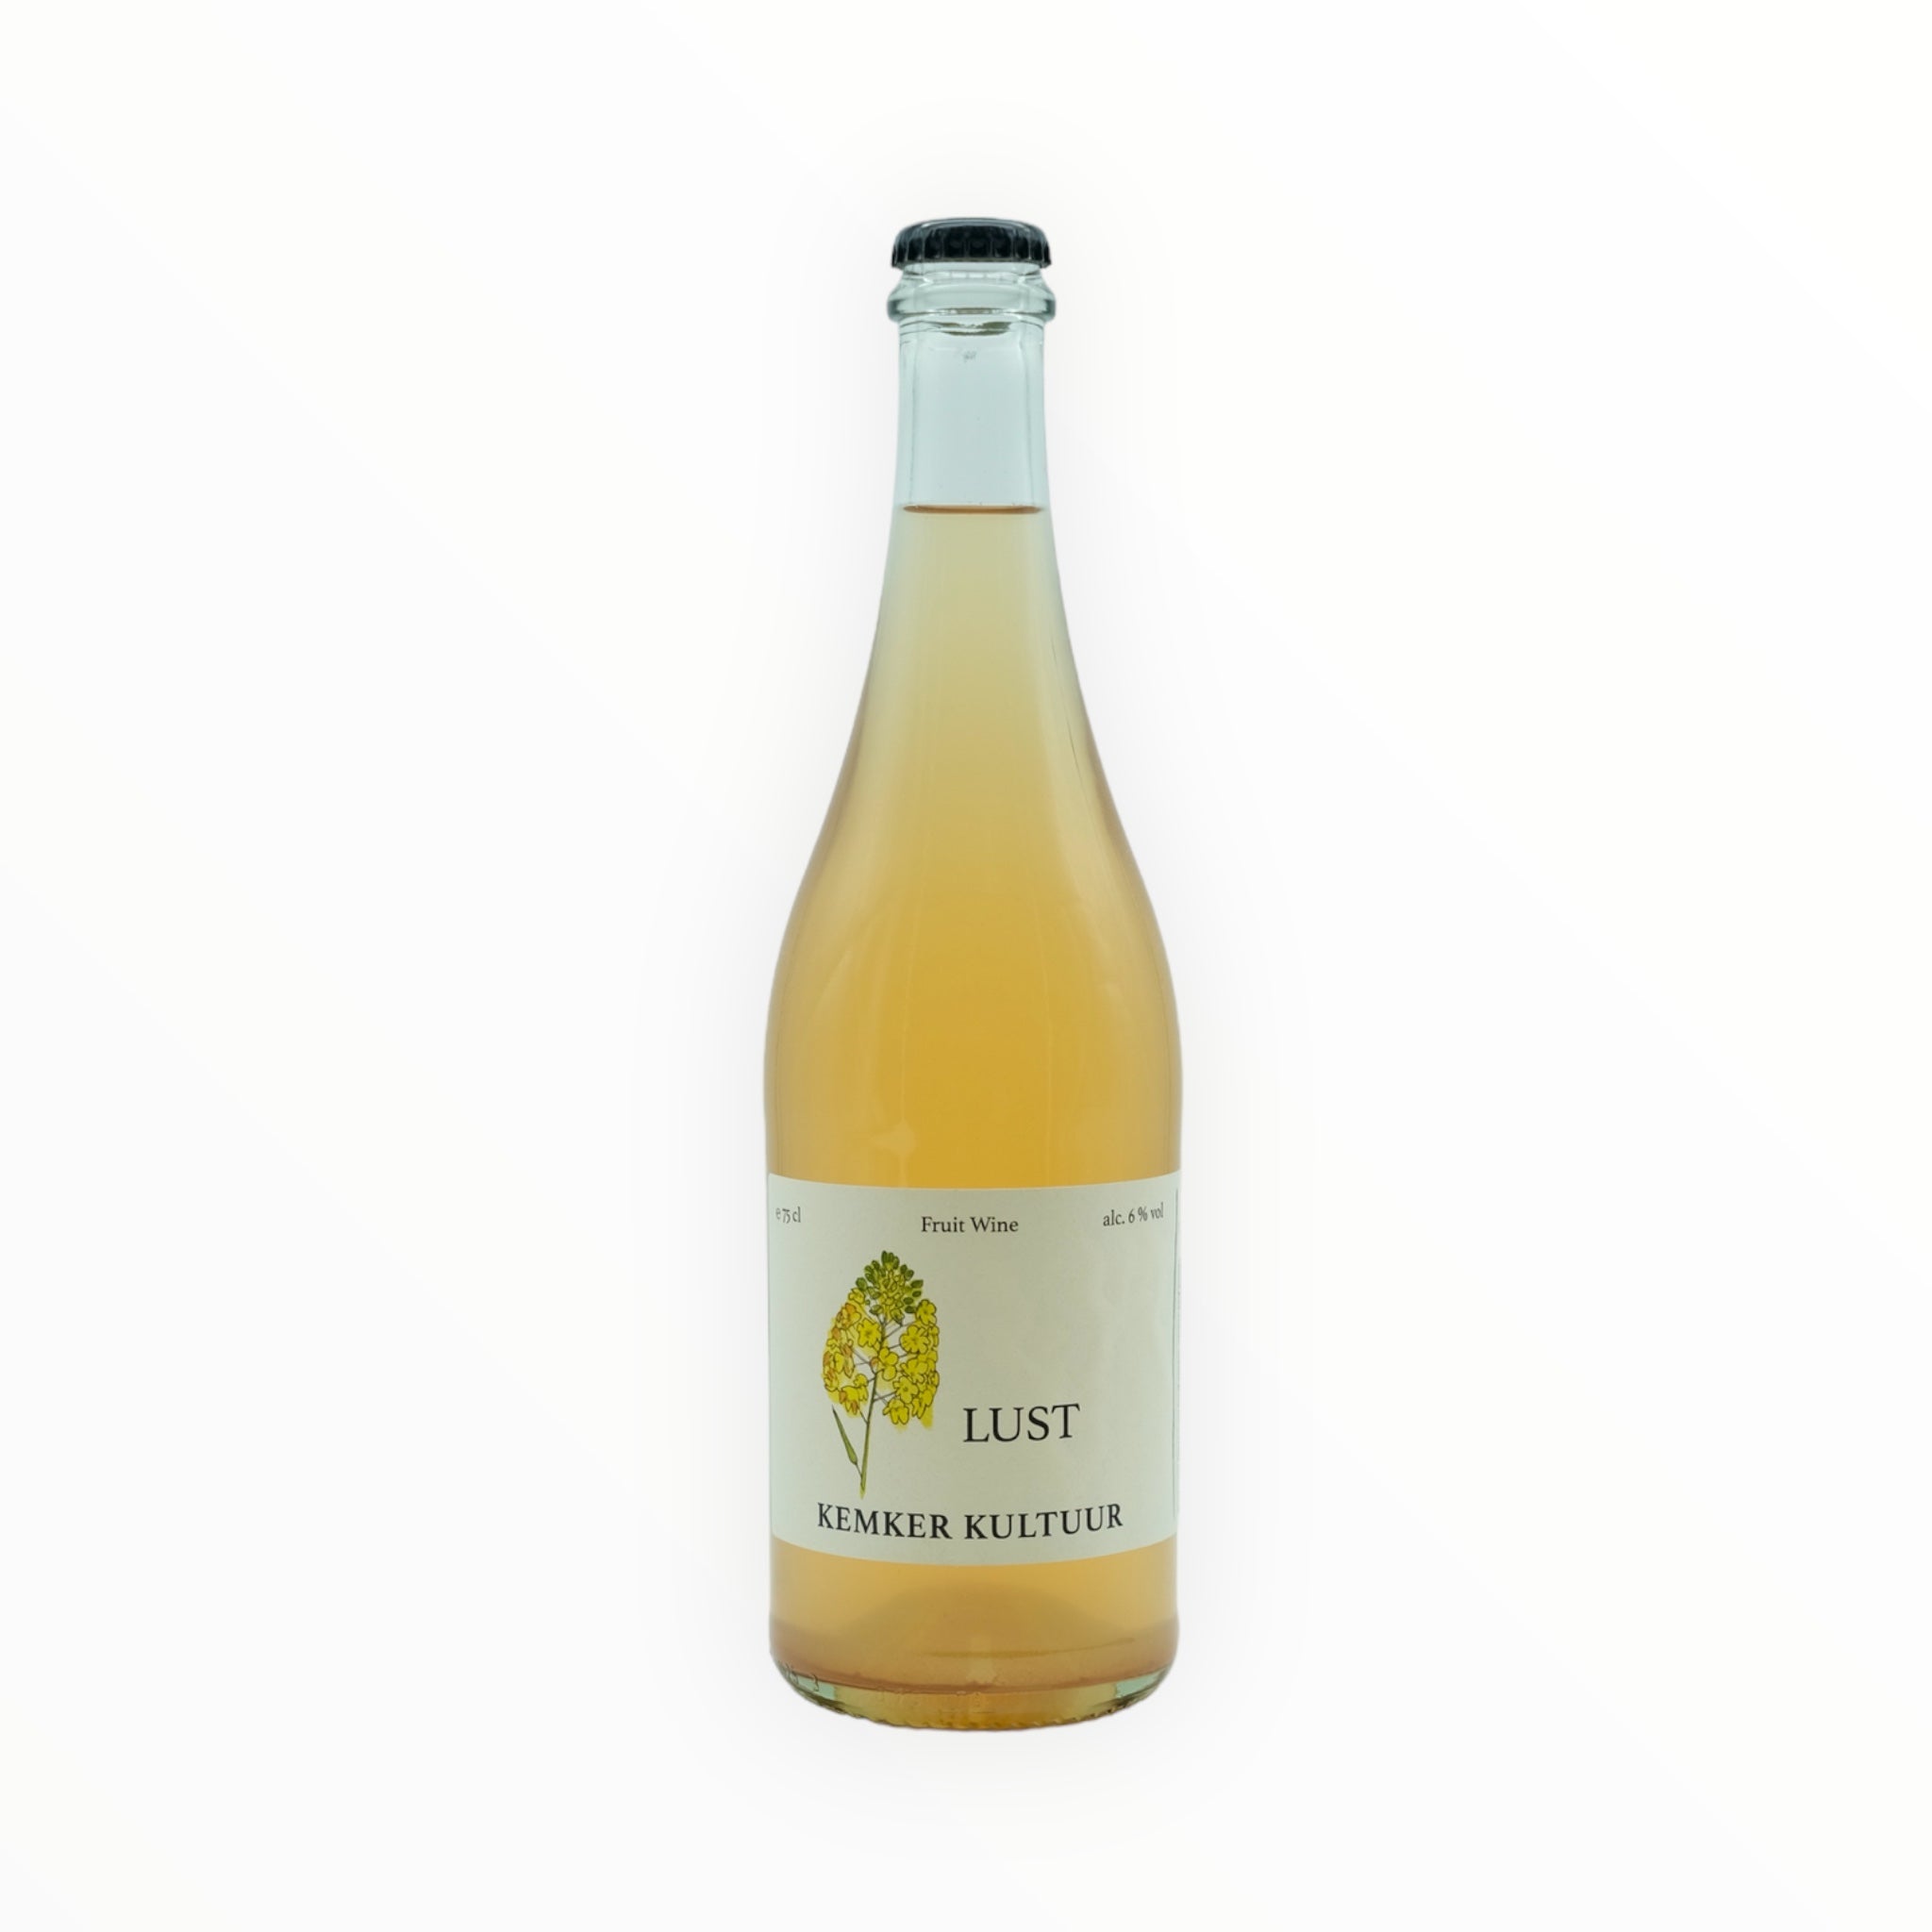 Brewery Kemker - Lust Quince/Aronia - Fluid Fruit